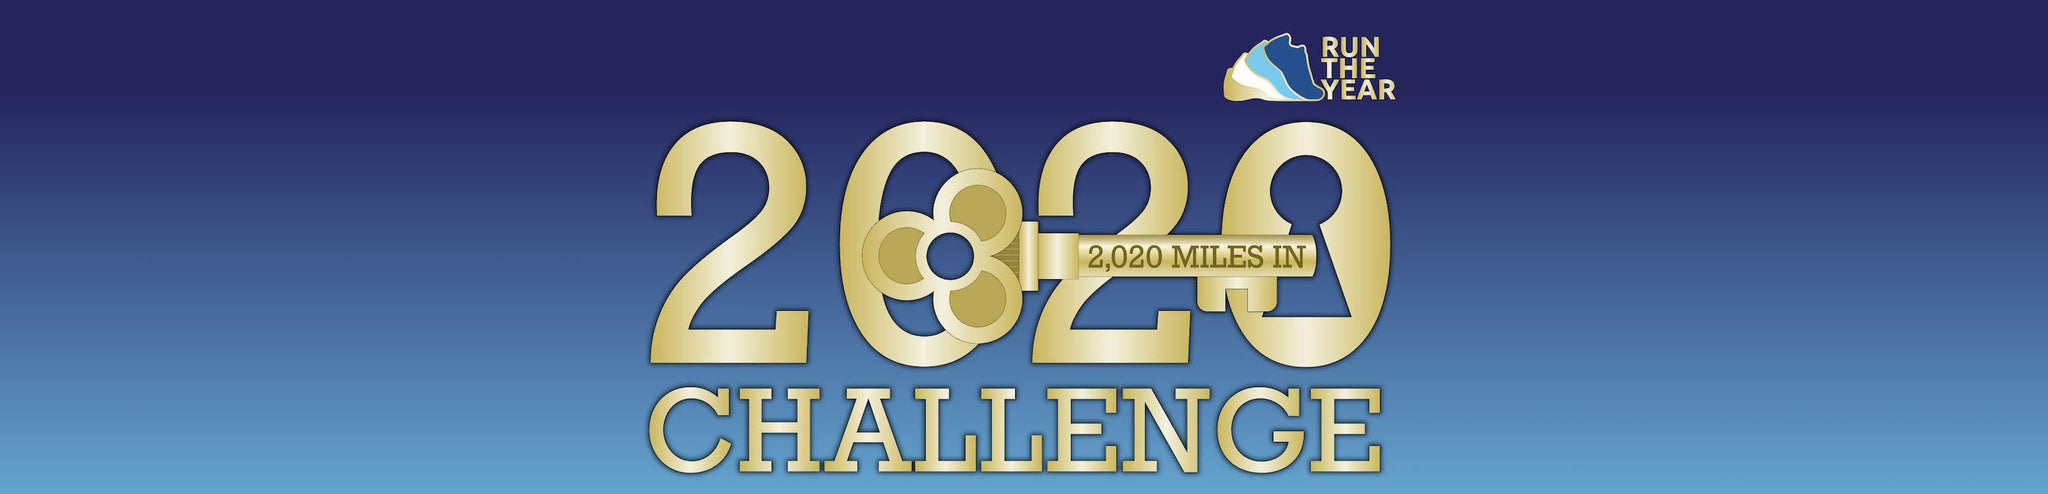 Run The Year 2020 Updates - Virtual Fitness Challenge Blog | Run The Edge